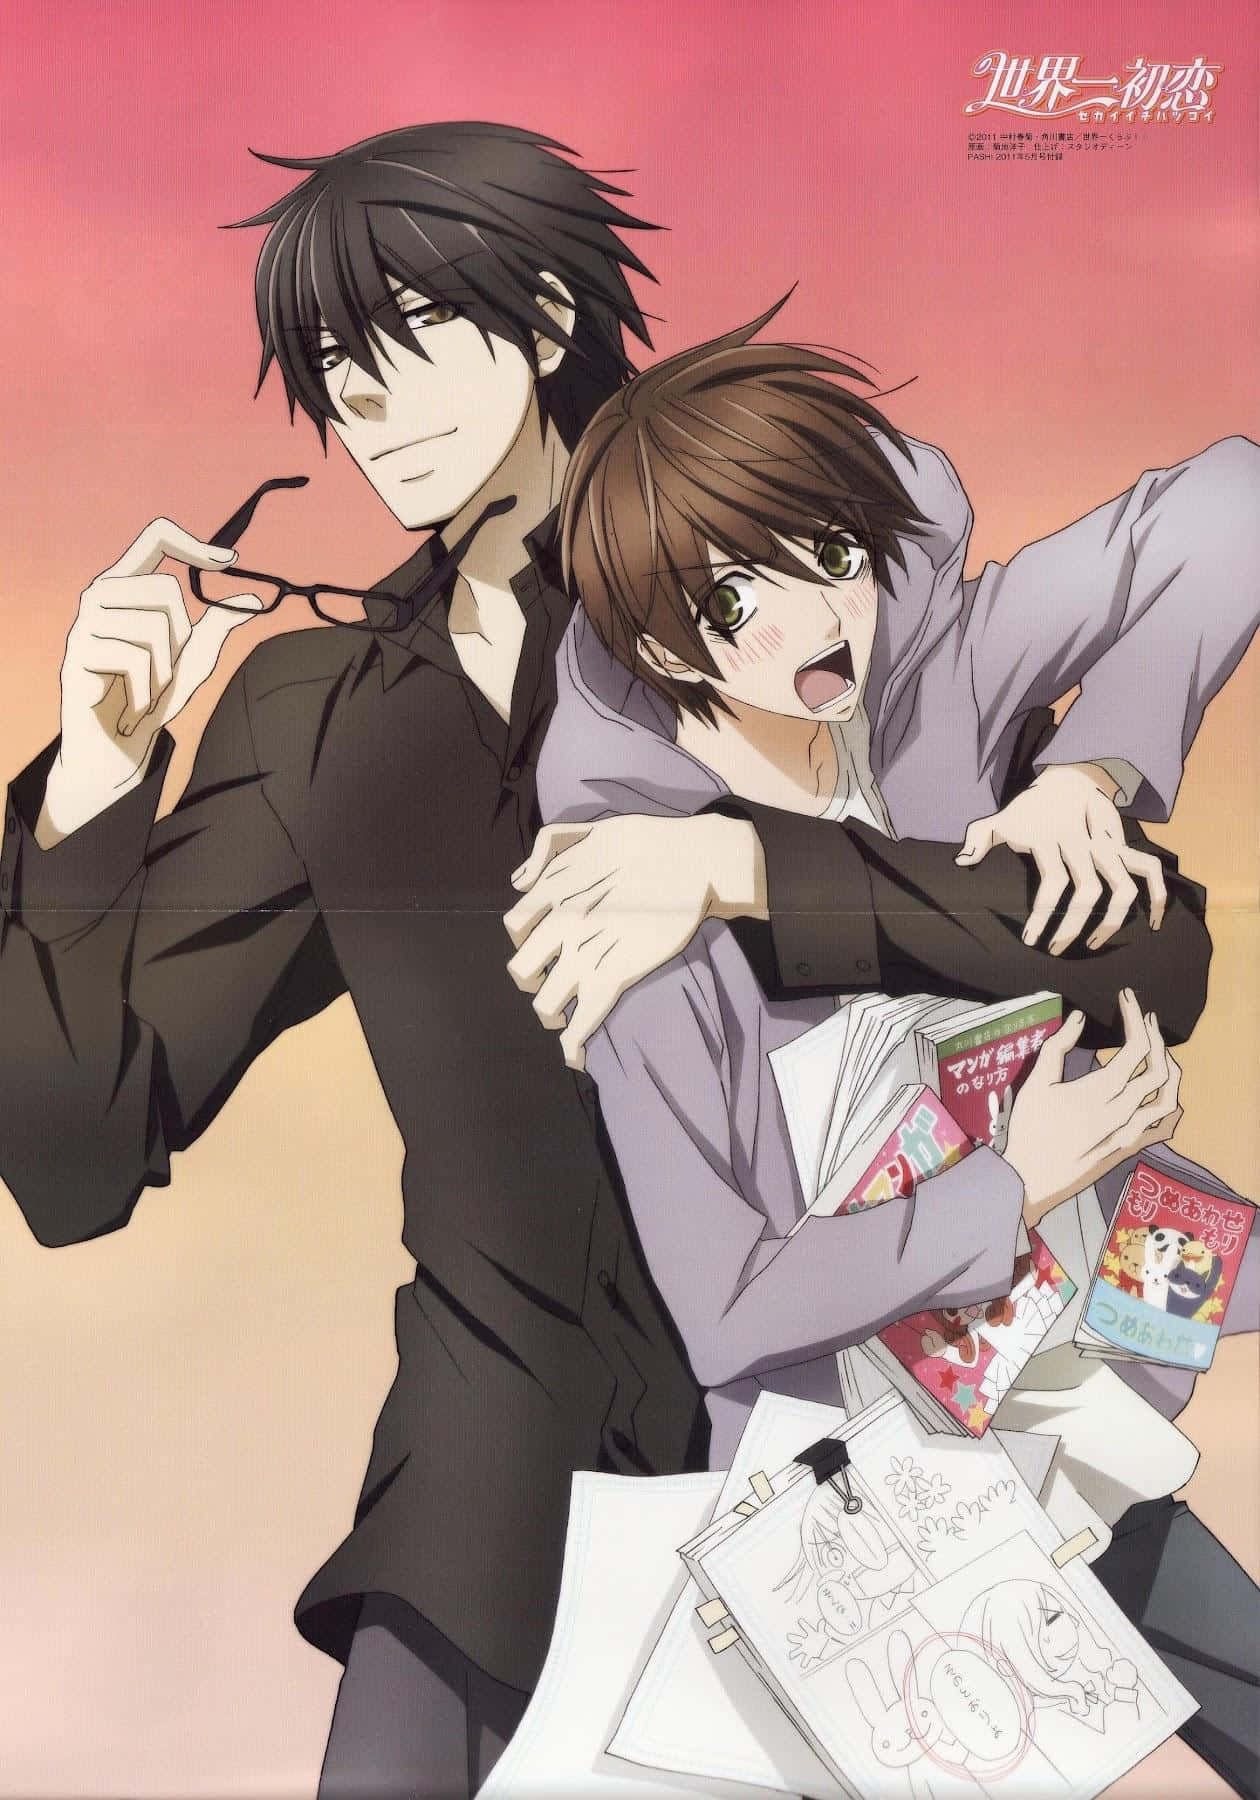 En plakat med to animekarakterer, der omfavner hinanden. Wallpaper